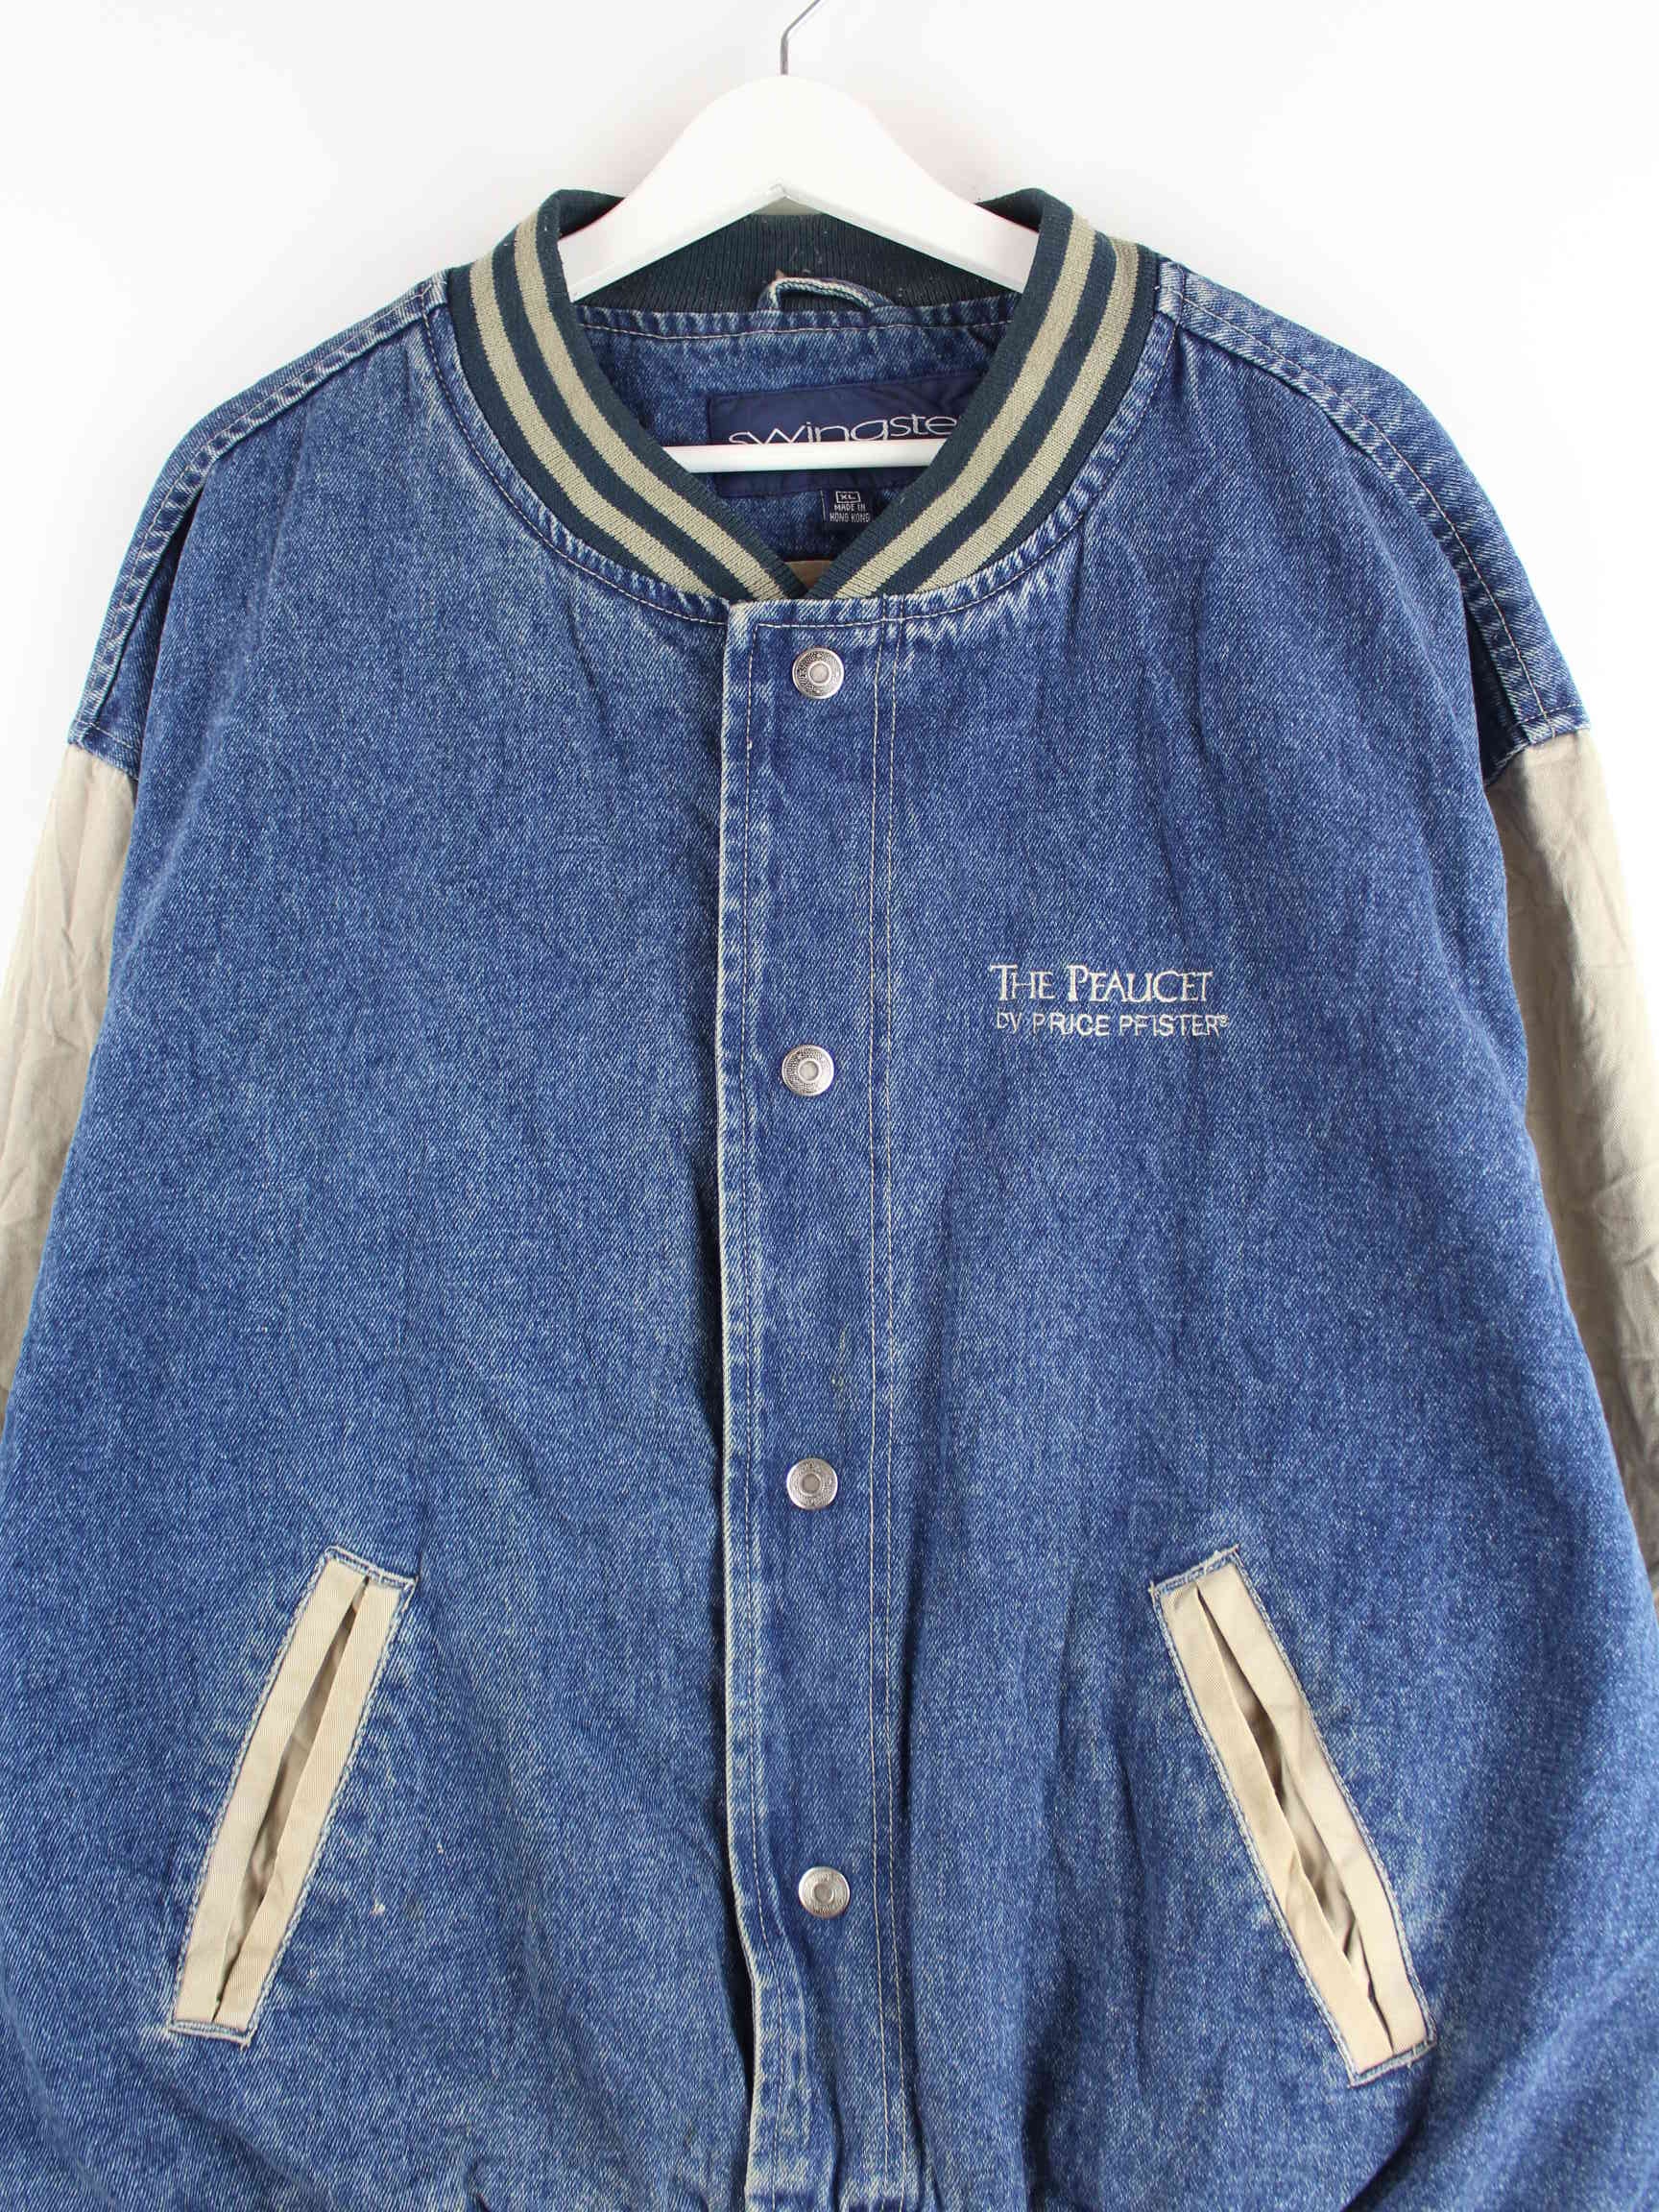 Vintage 1996 Altanta Olympic Embroidered Denim College Jacke Blau XL (detail image 1)